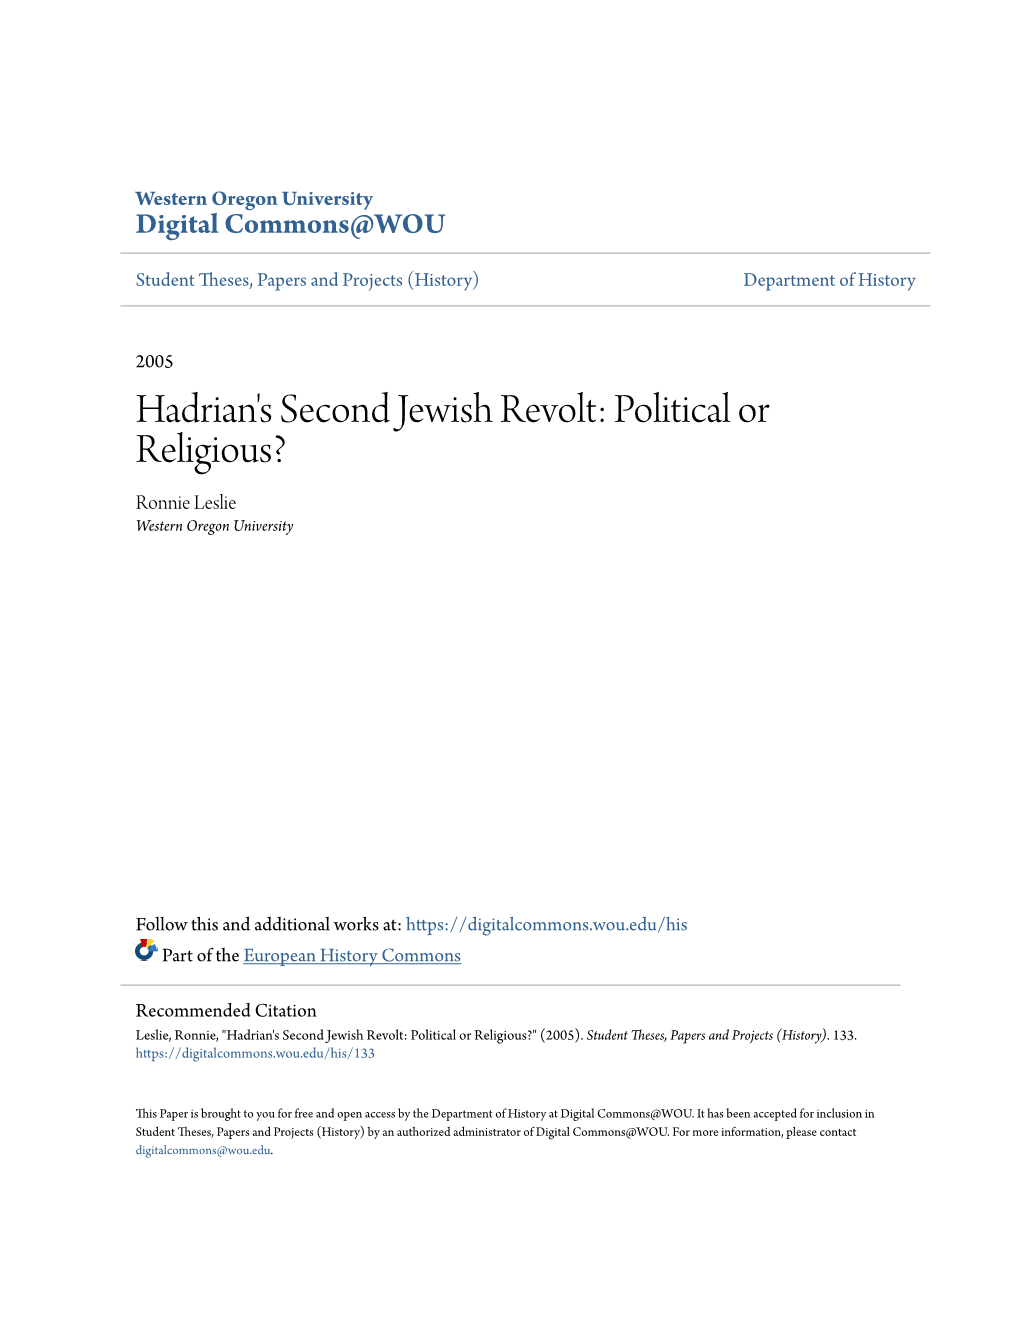 Hadrian's Second Jewish Revolt: Political Or Religious? Ronnie Leslie Western Oregon University